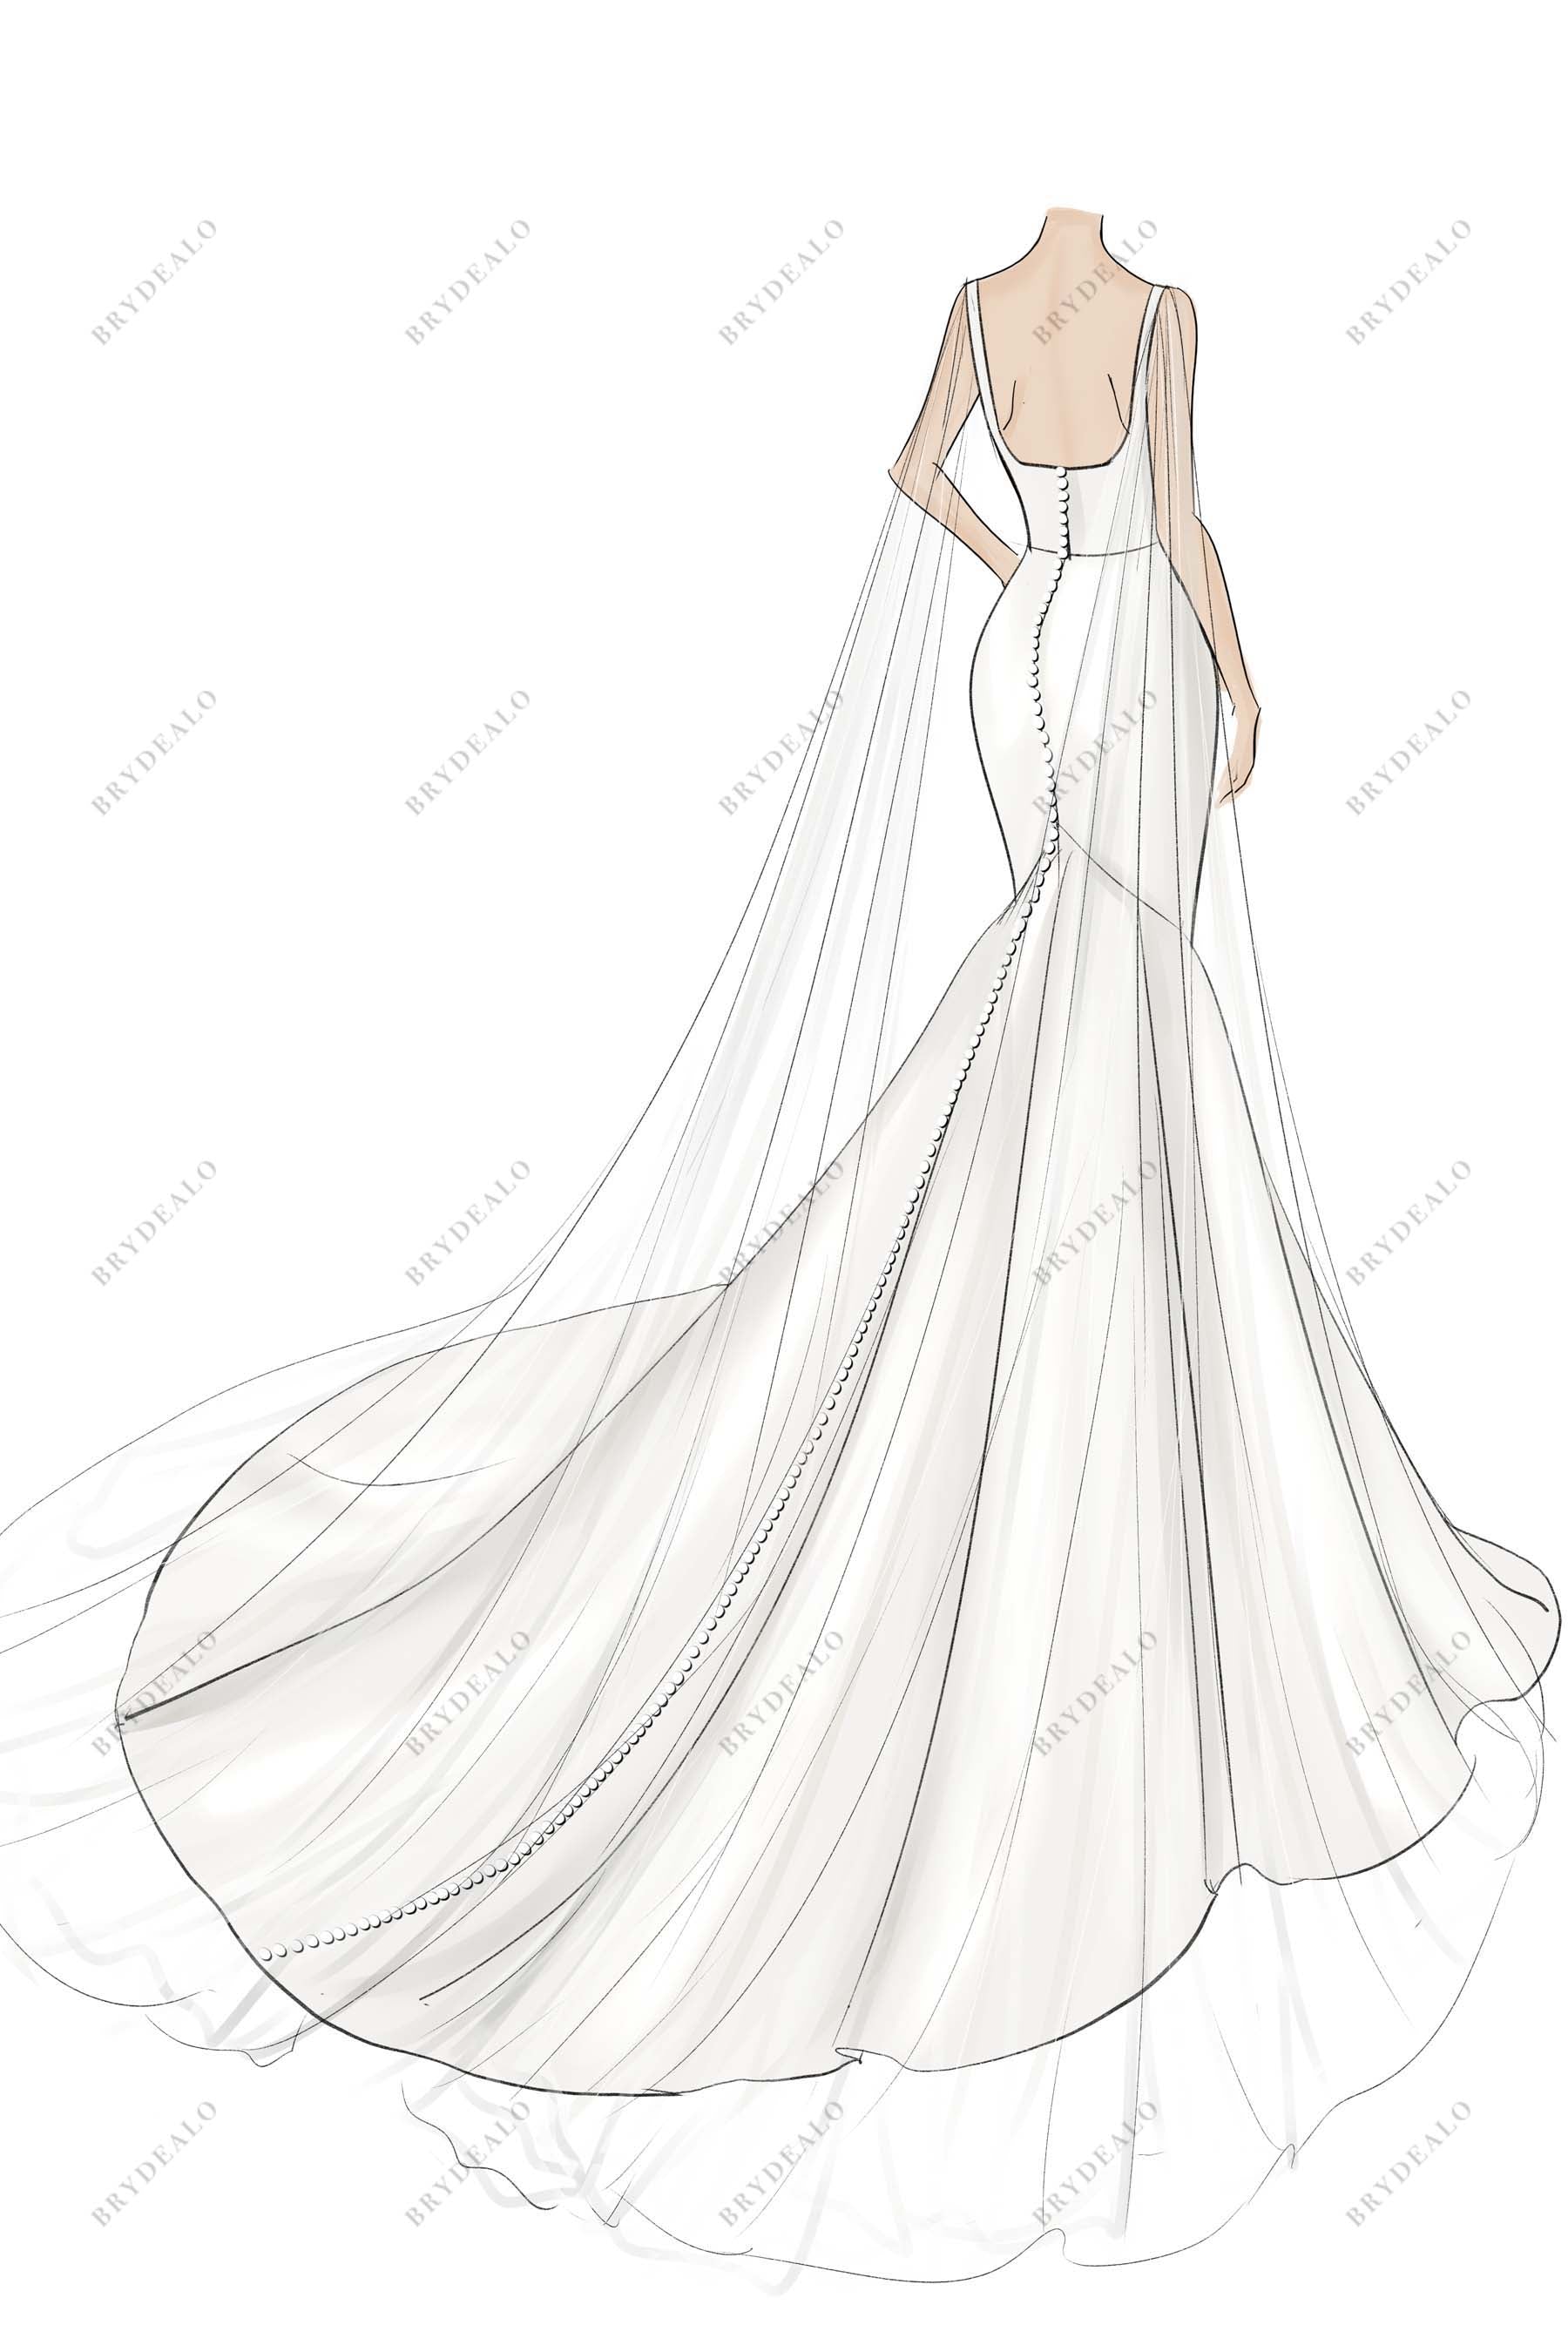 Sheer Streamers Corset Designer Mermaid Bridal Dress Sketch